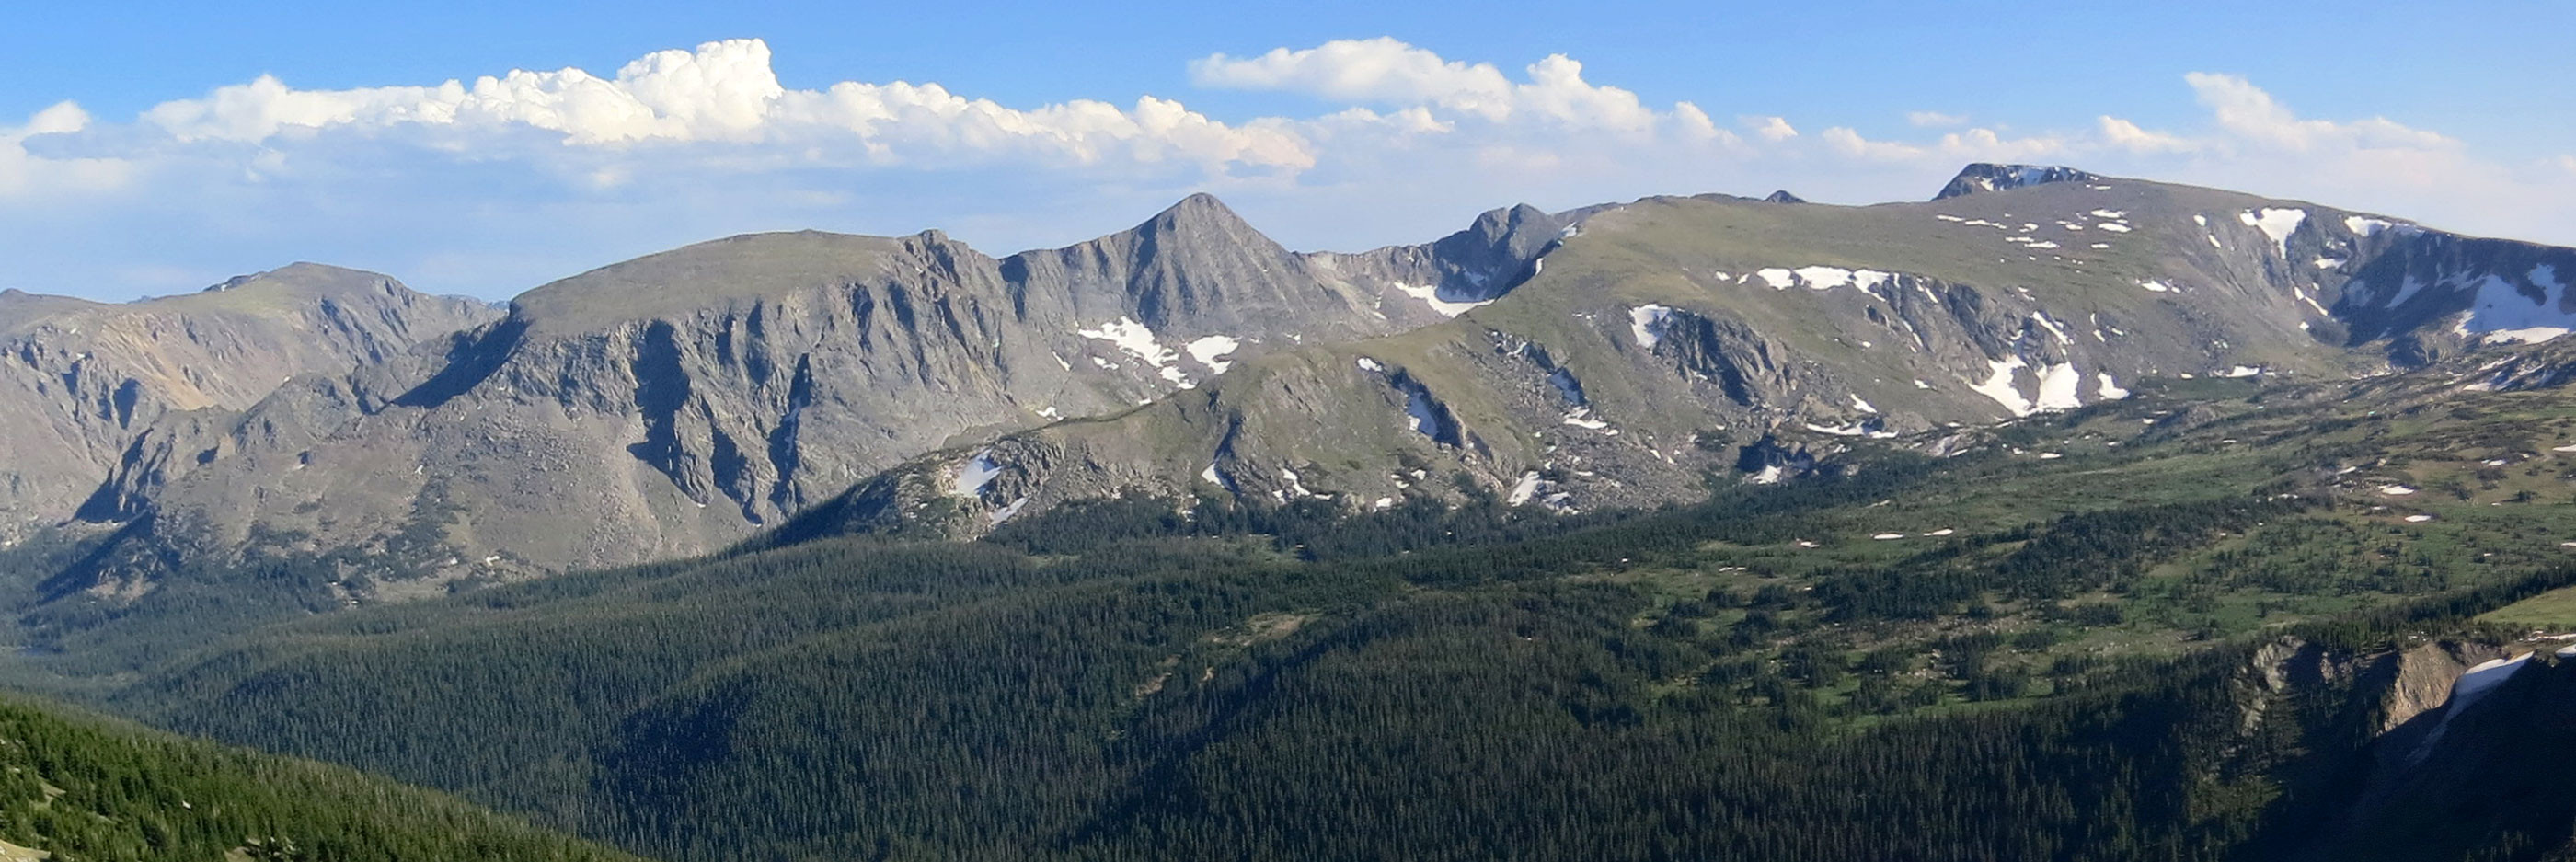 Rocky Mountain National Park | Colorado's Wild Areas